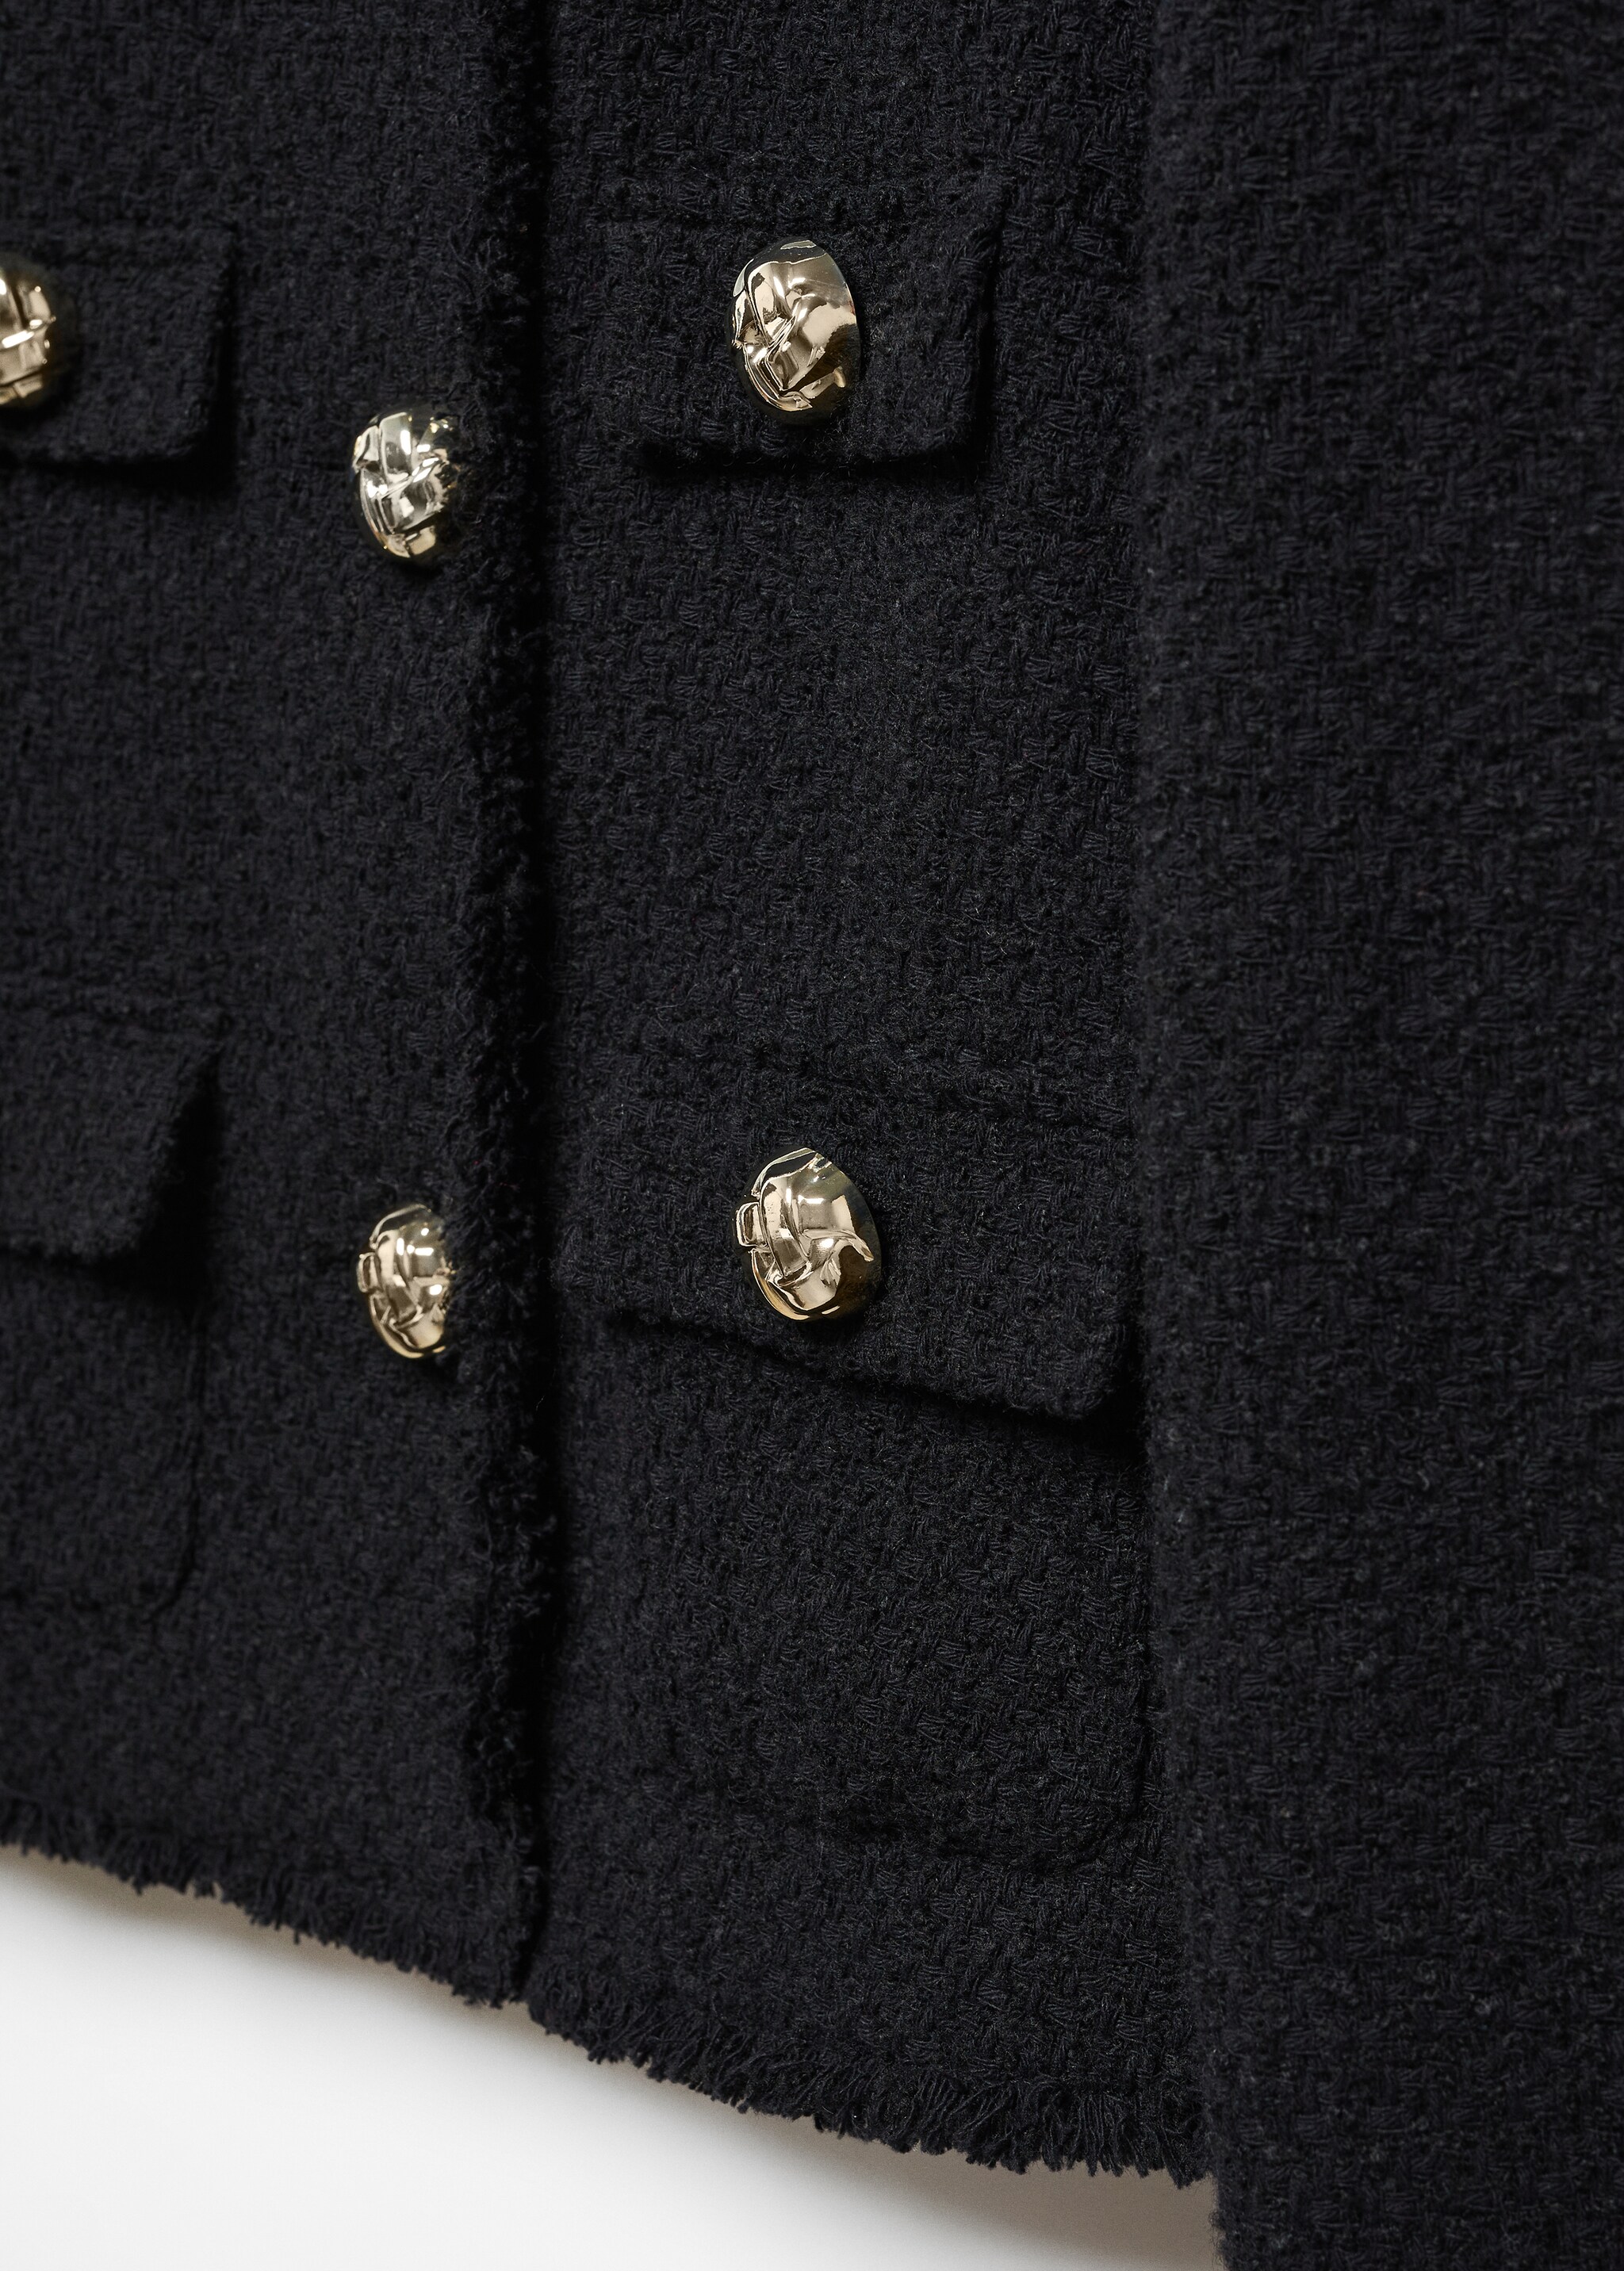 Pocket tweed jacket - Details of the article 8